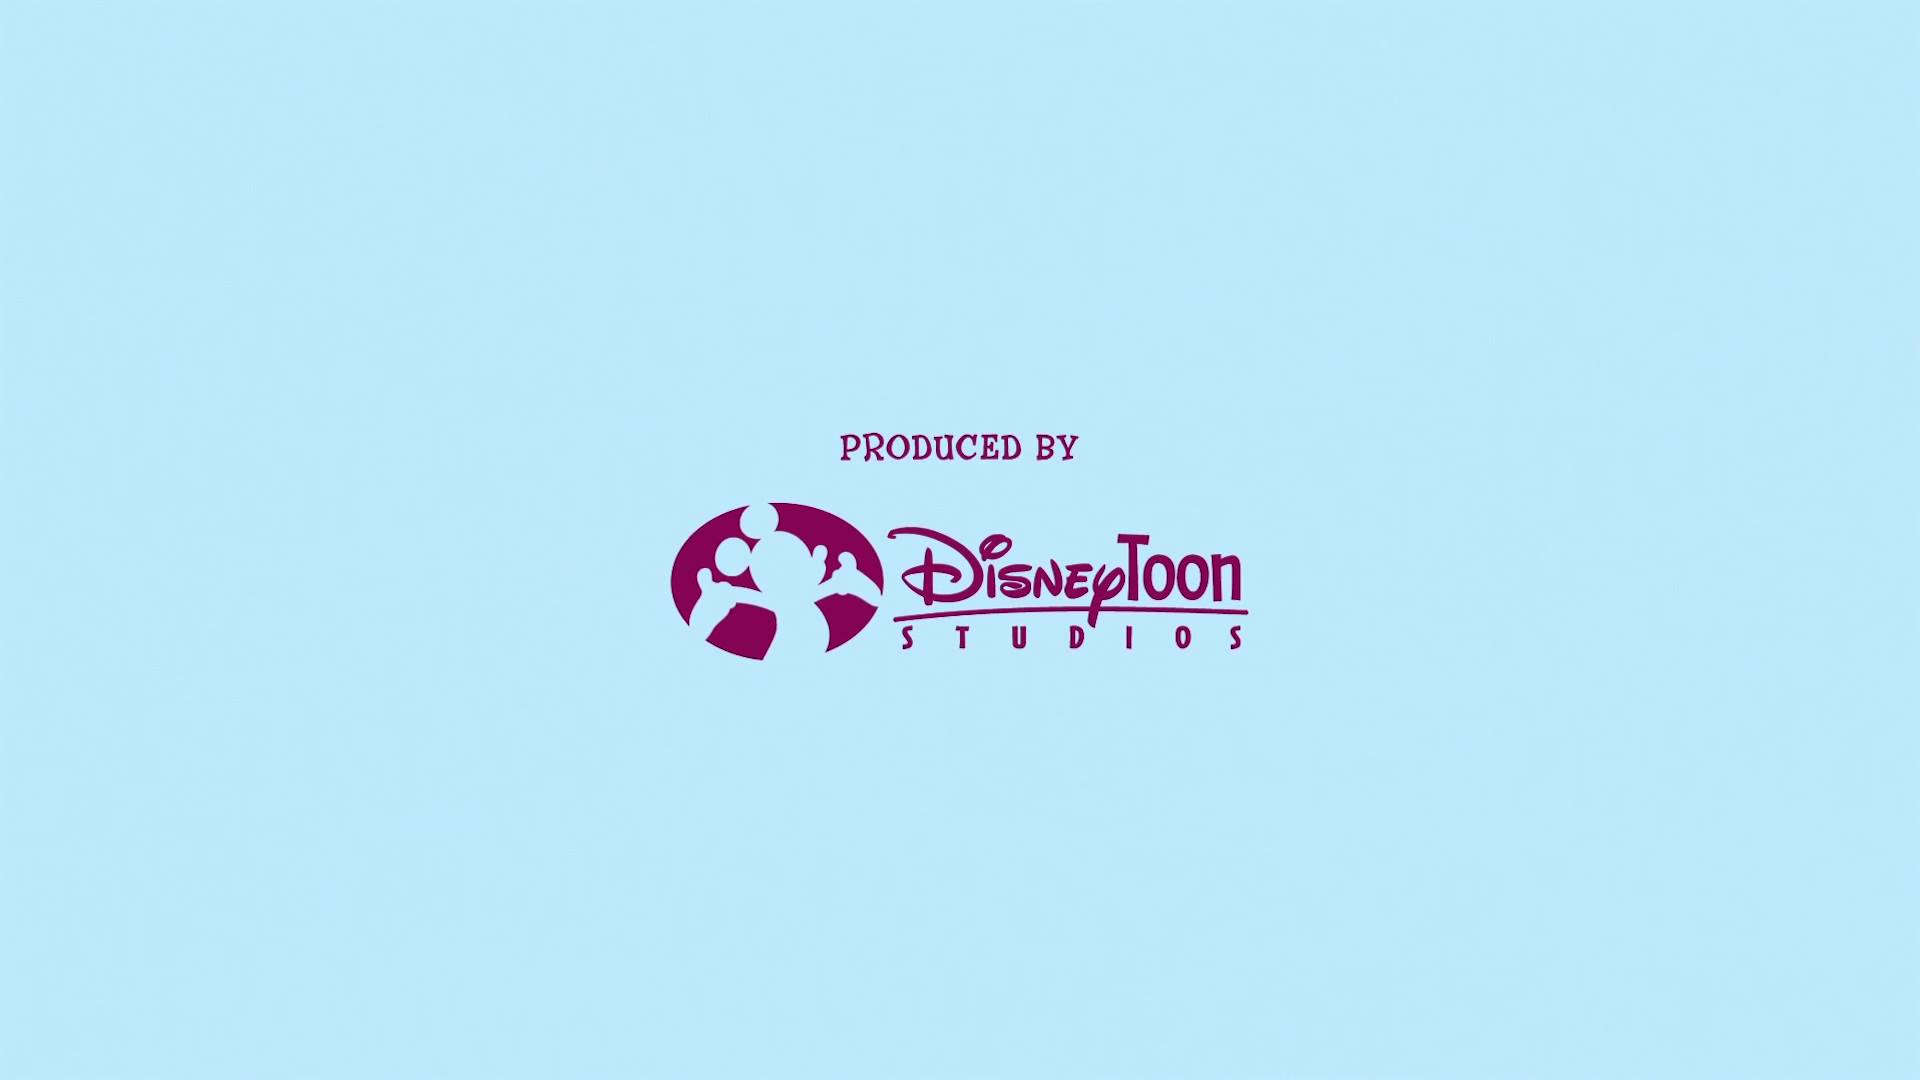 Disneytoon studios. 